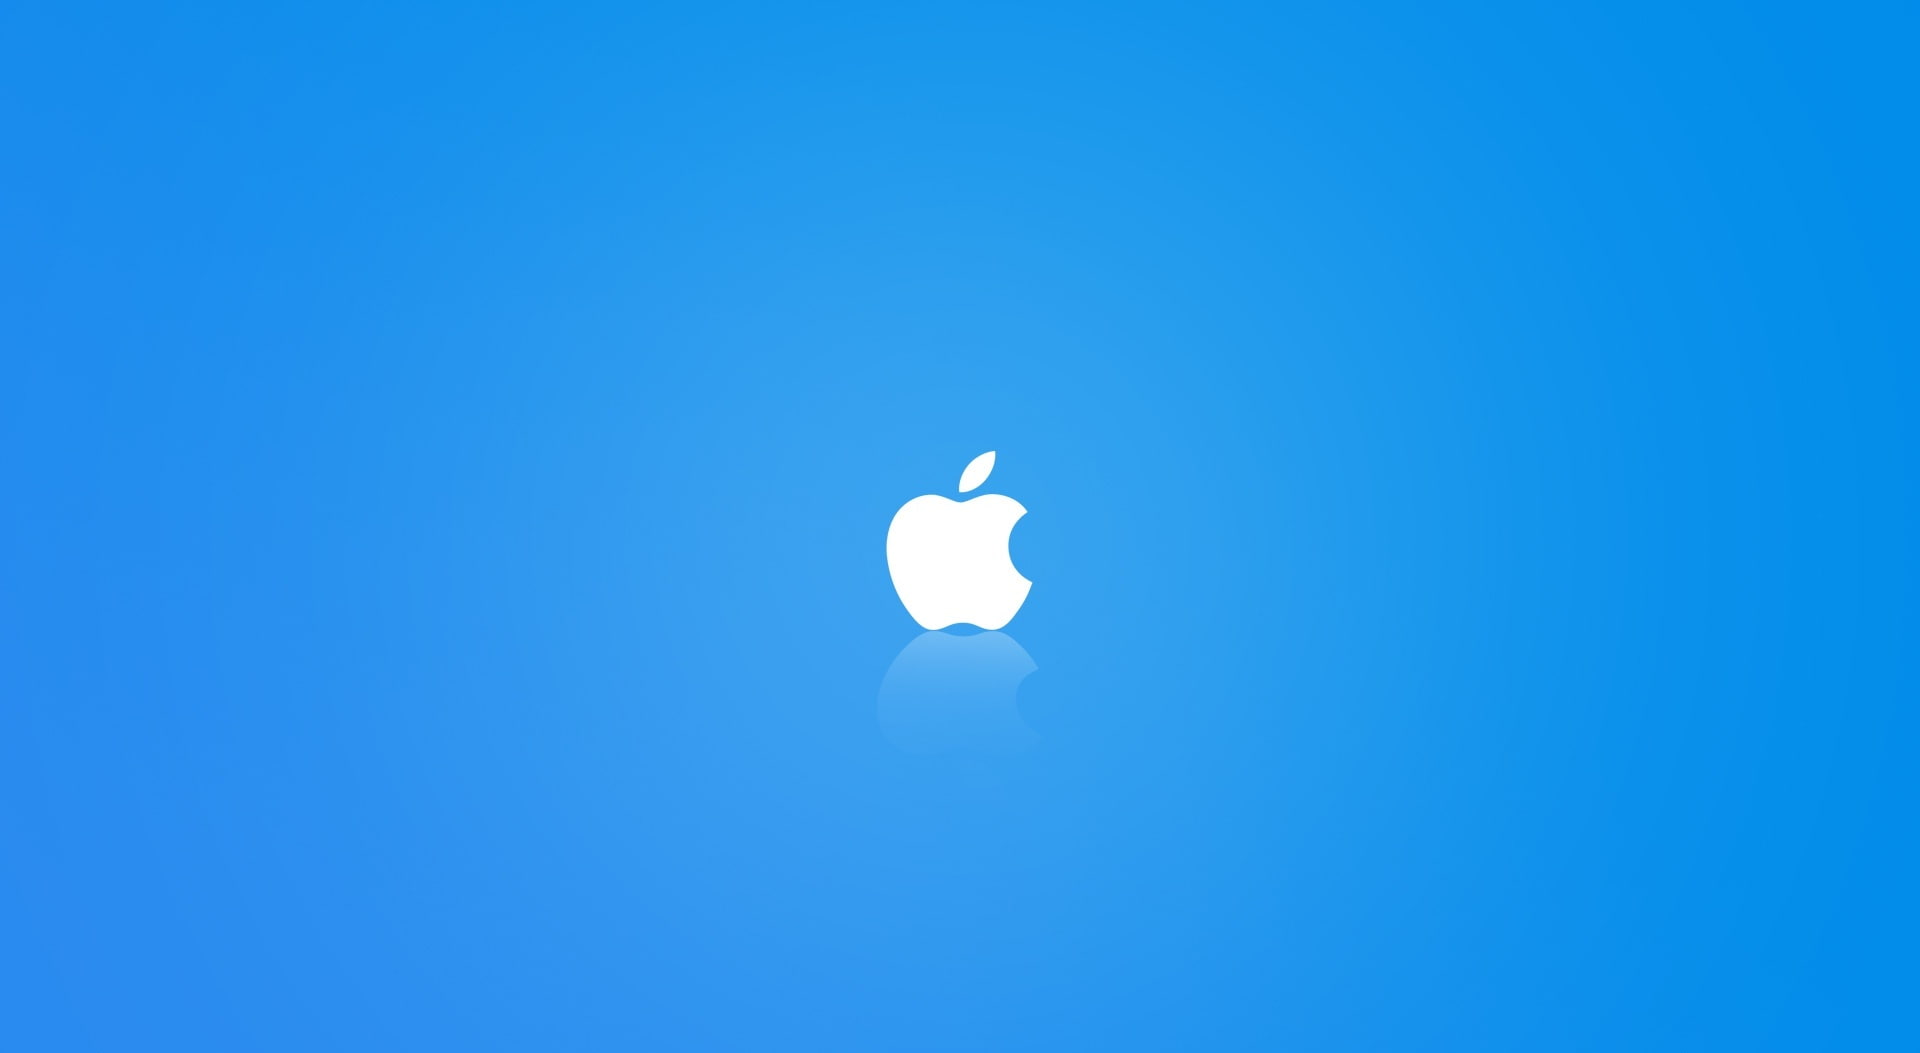 Apple MAC OS X Blue, apple logo, Computers, sky, copy space, clear sky